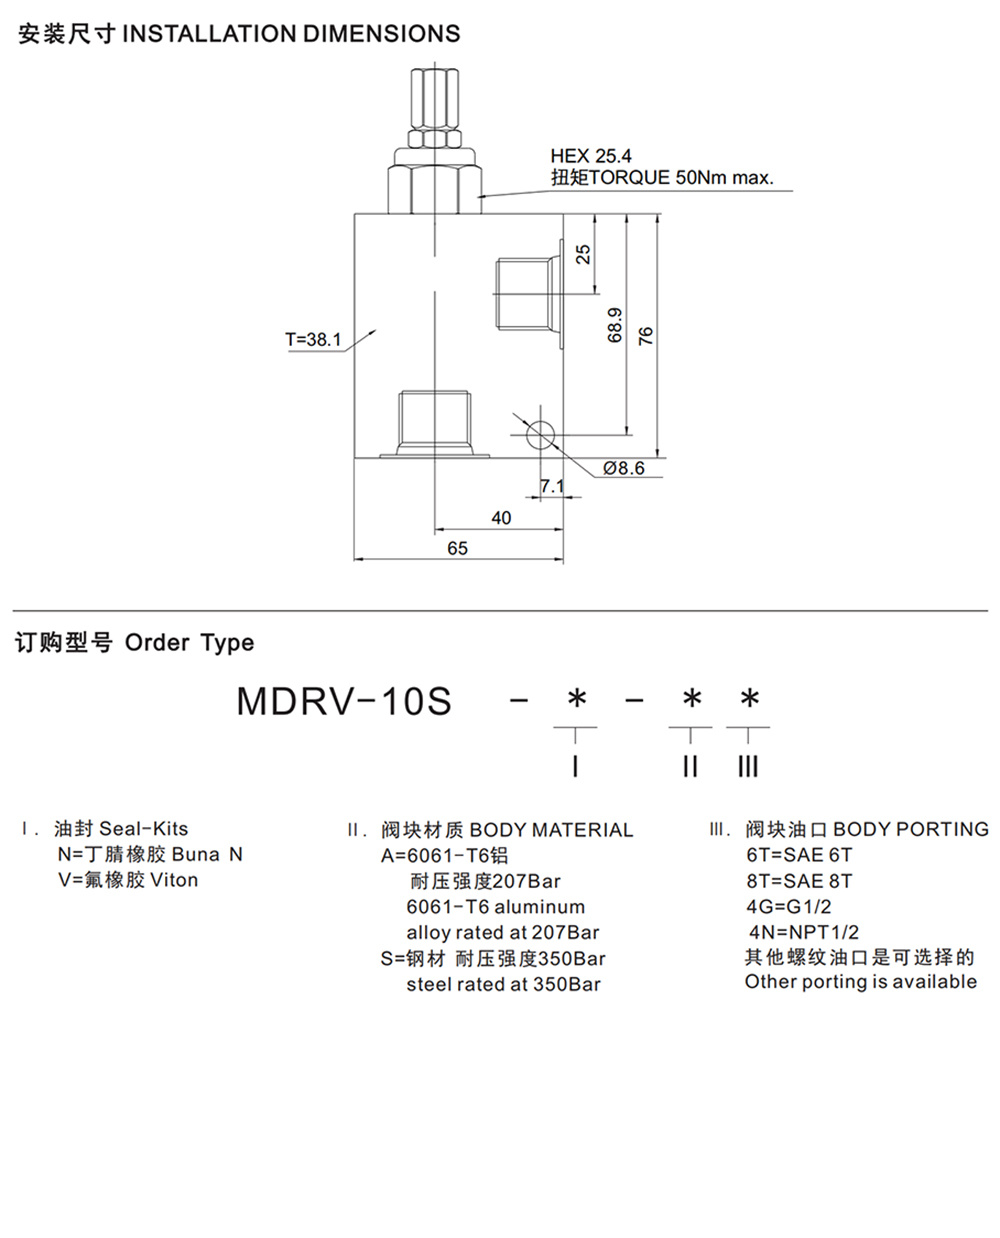 MDRV-10S